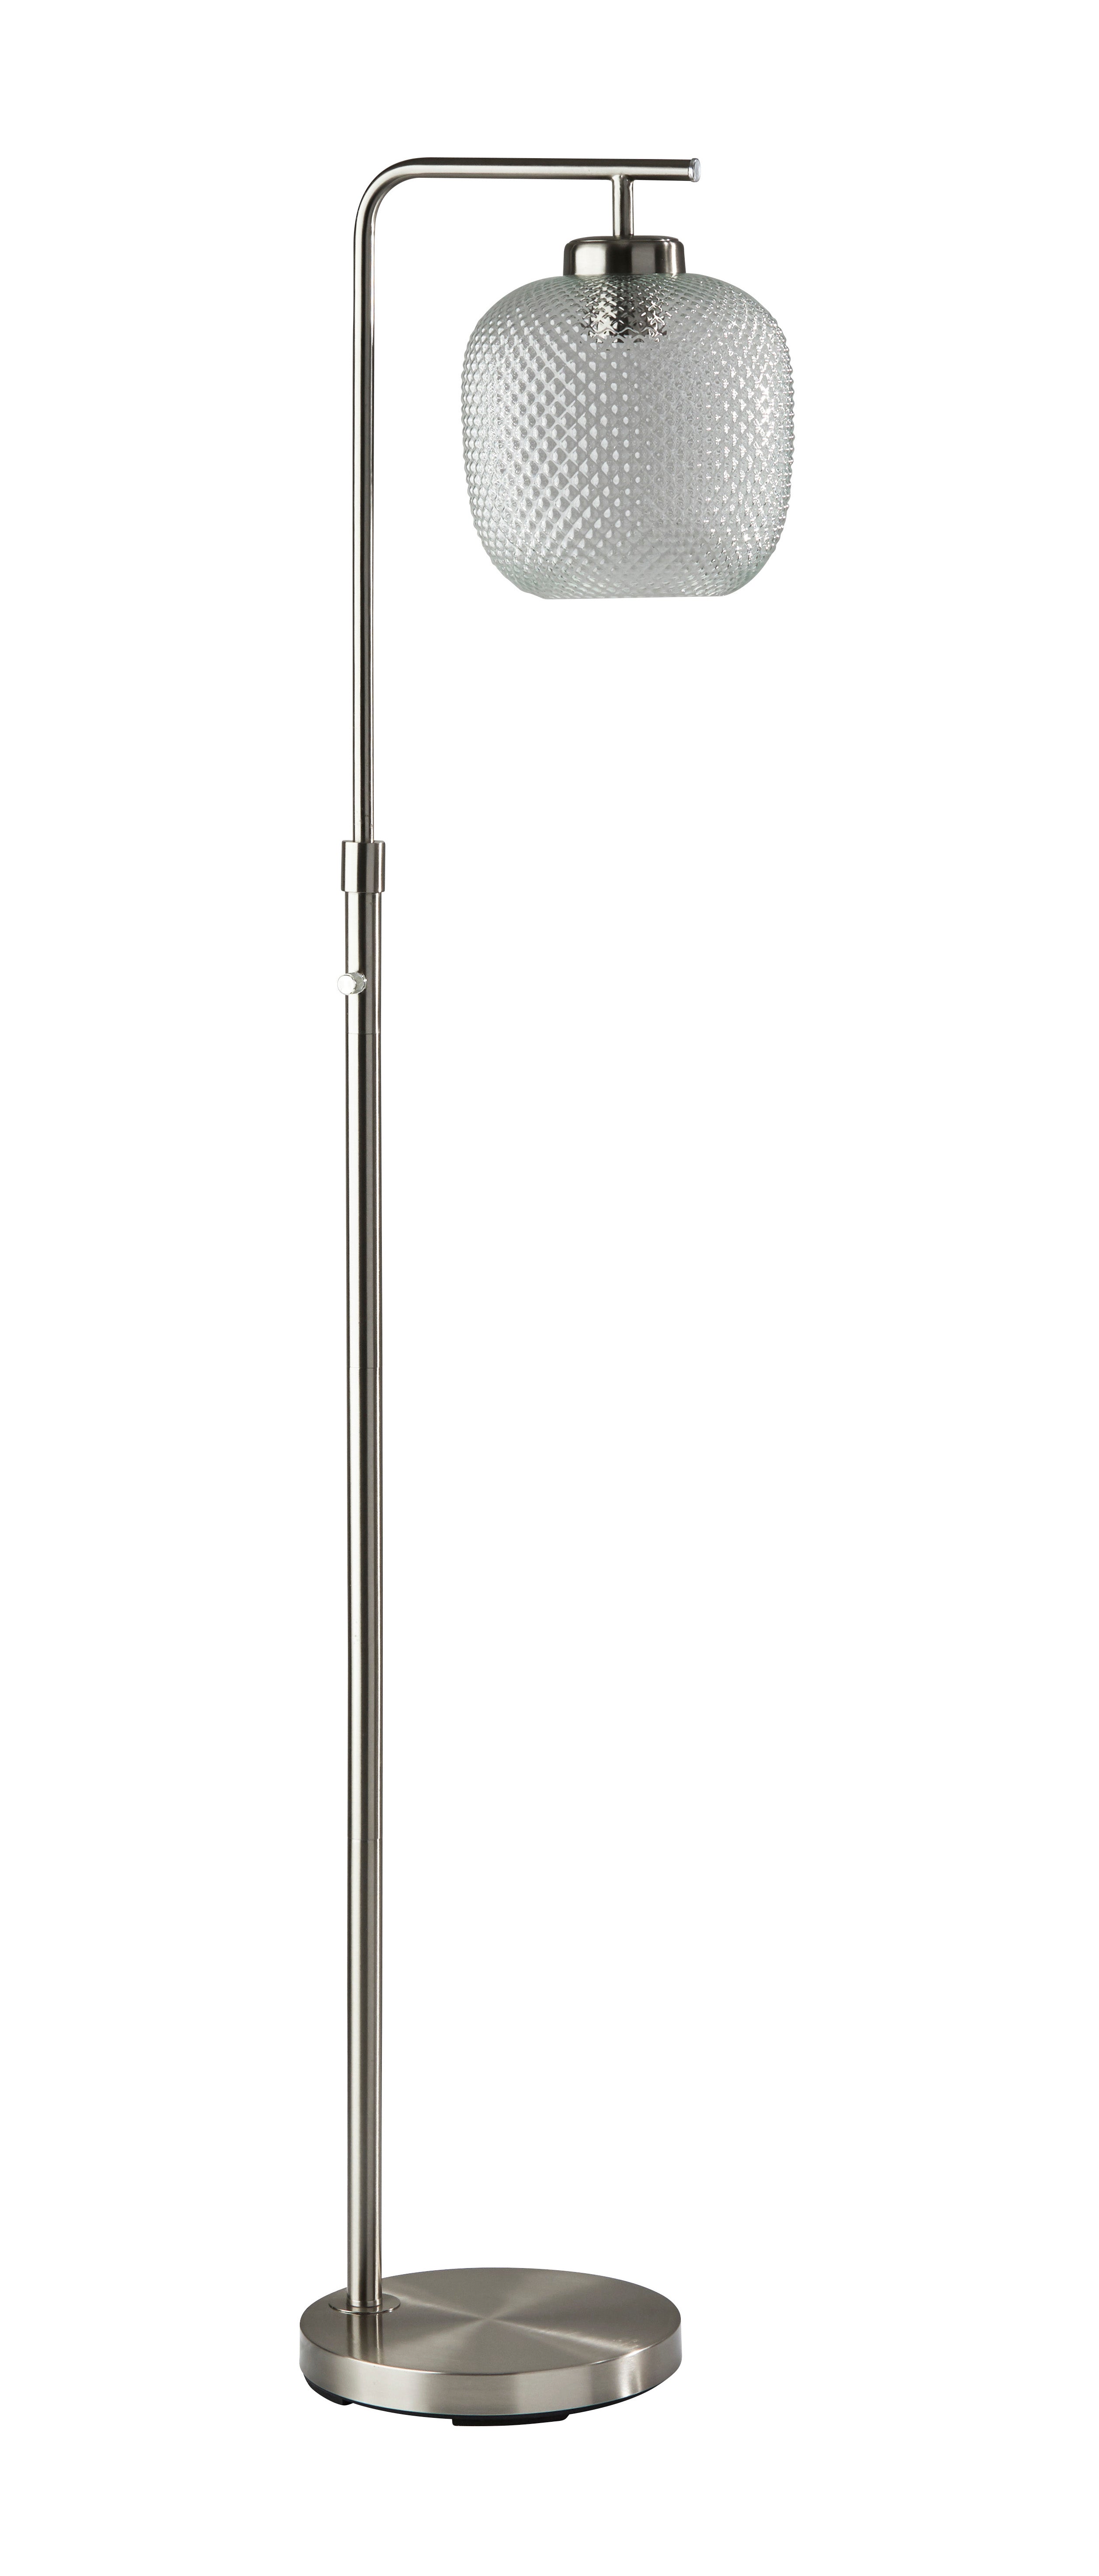 VIVIAN Floor lamp Stainless steel - 3577-22 | ADESSO